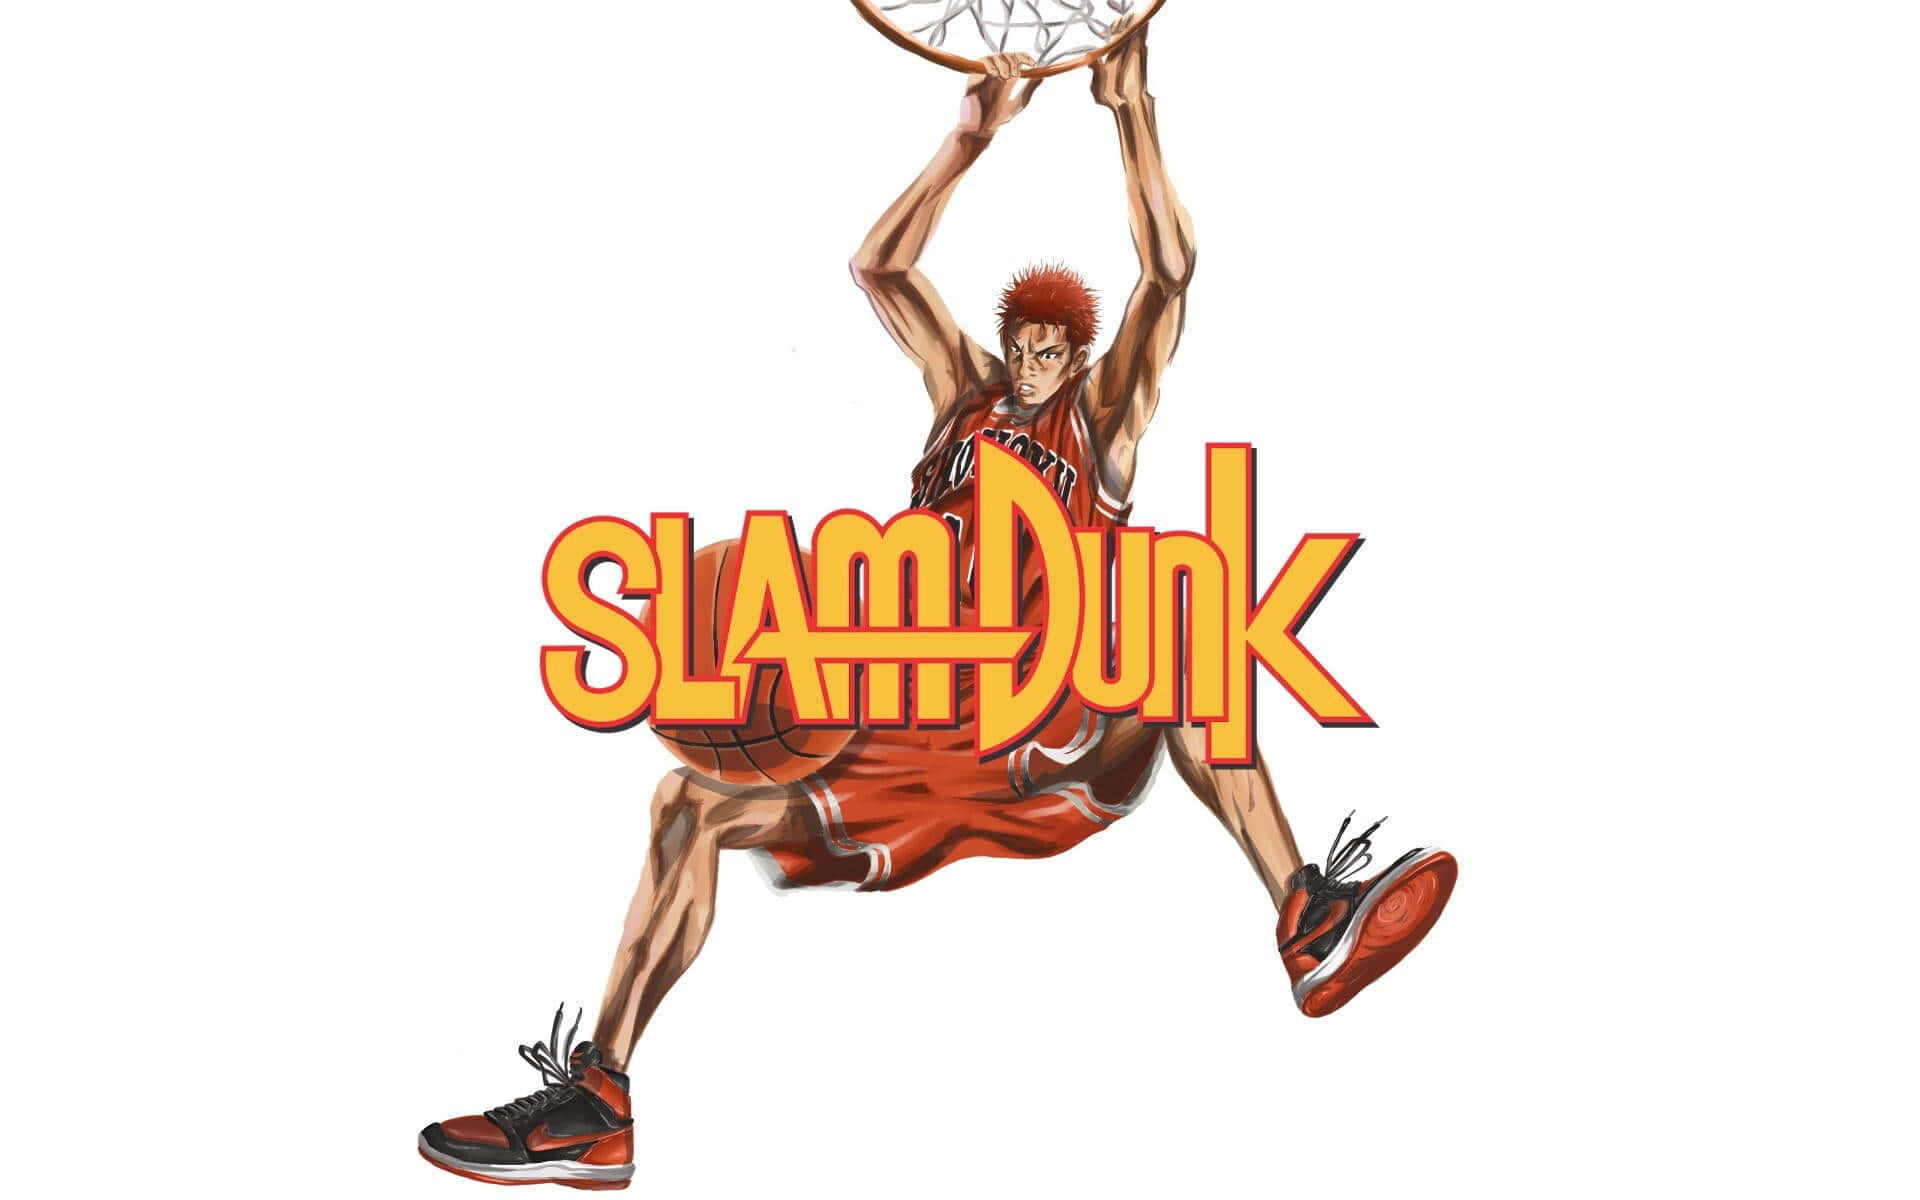 200+] Slam Dunk Backgrounds